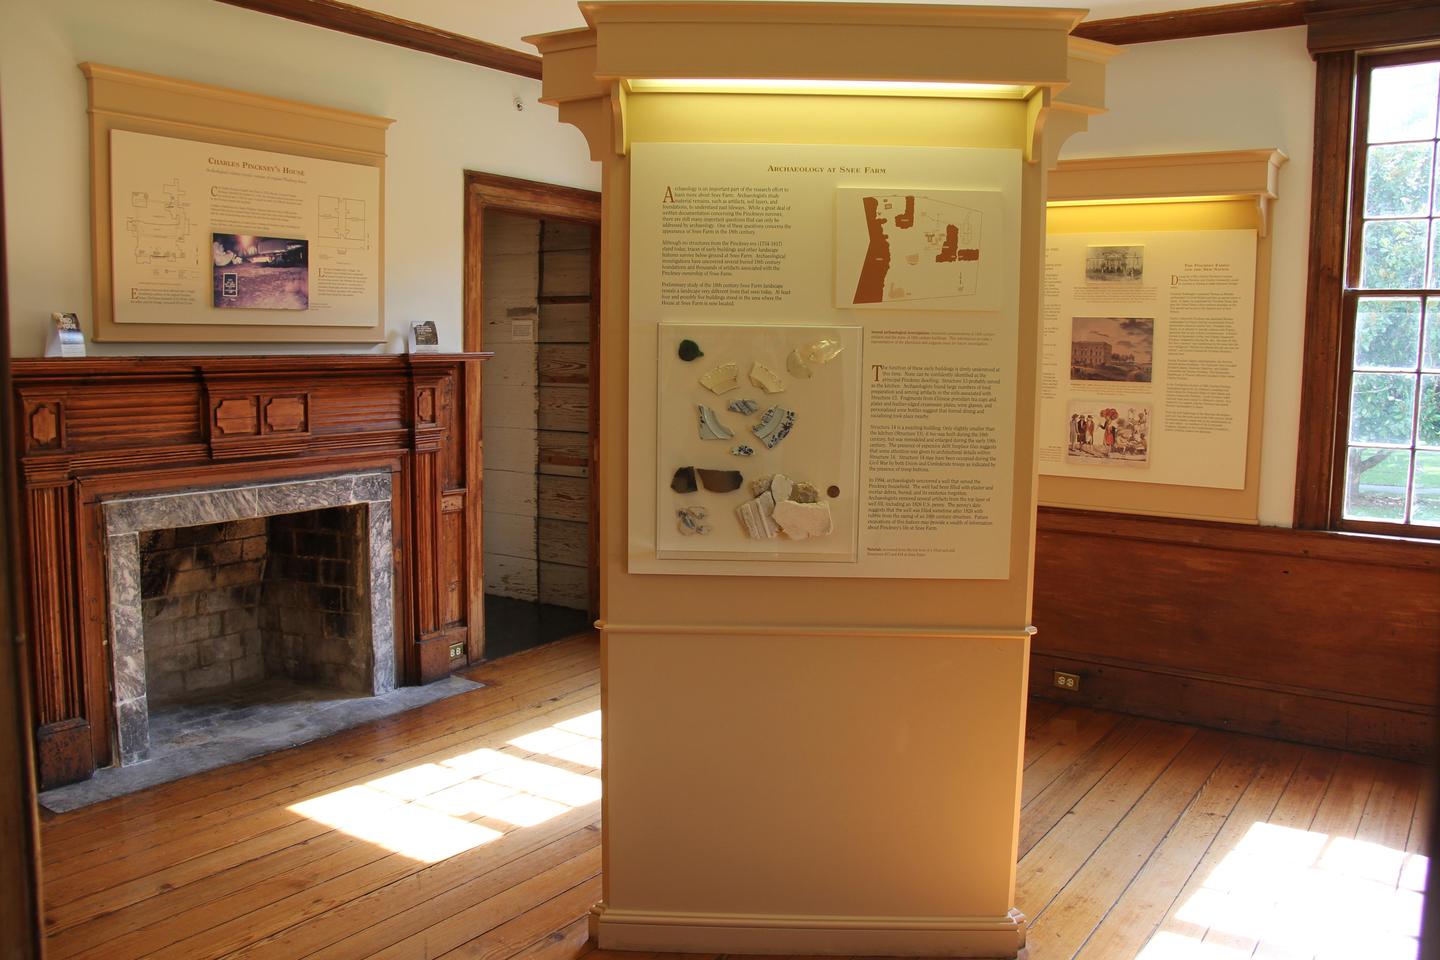 Charles Pinckney NHS Archeology Room Exhibits Inside Historic HouseArcheology room exhibits inside historic house.